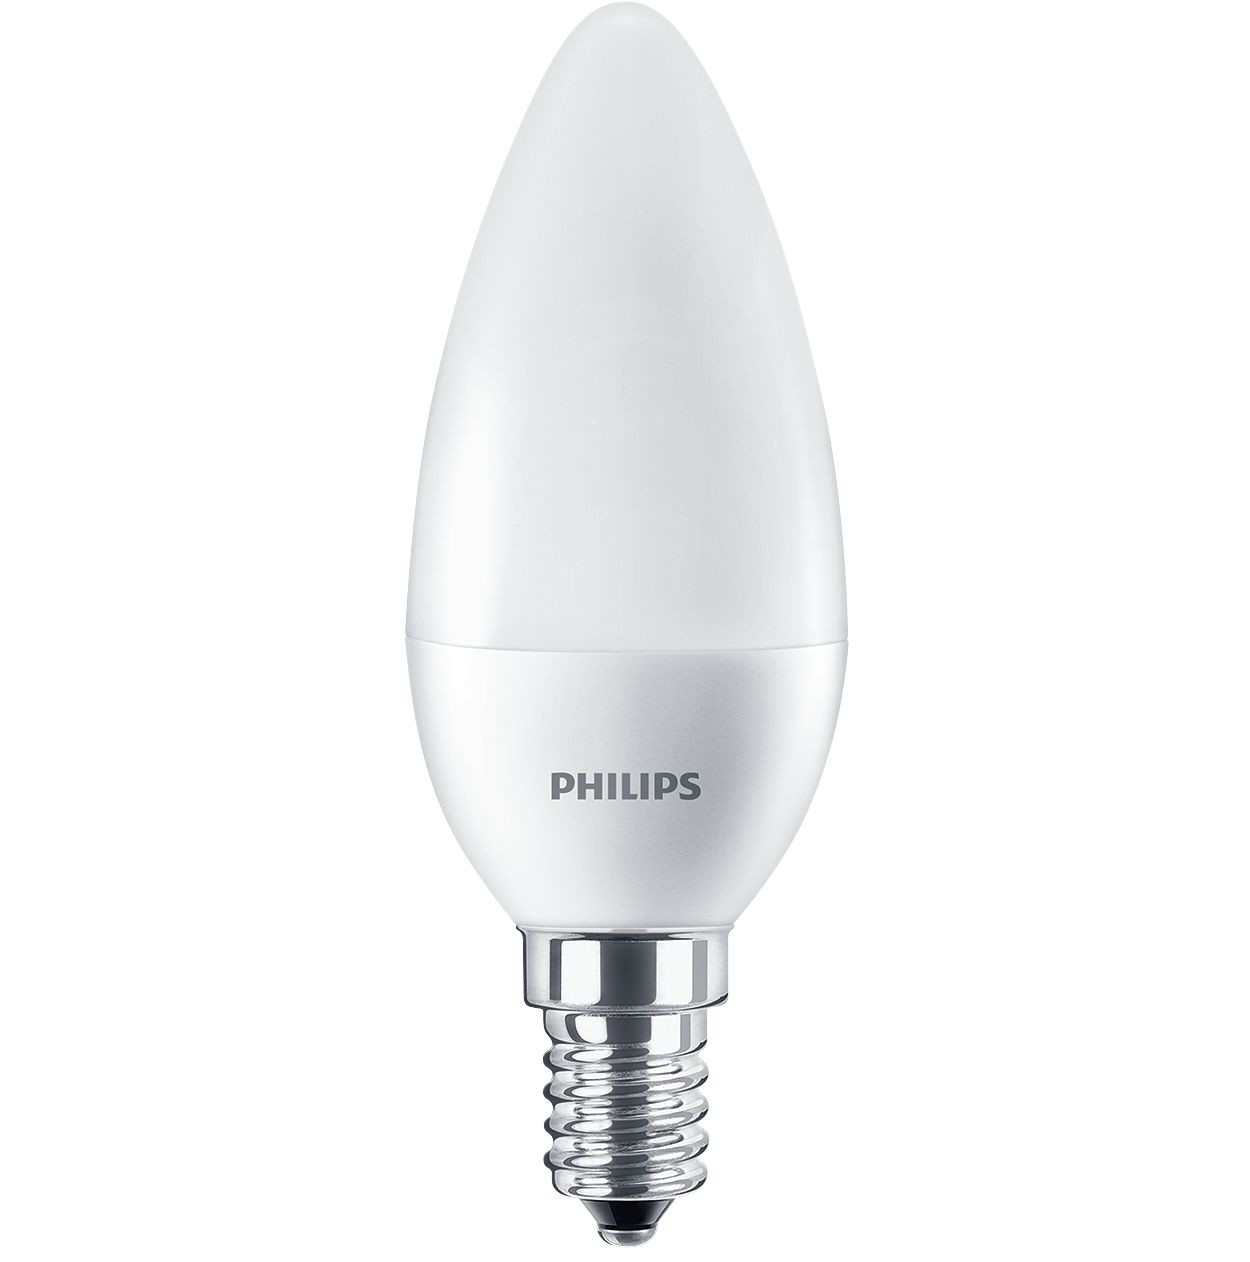 Philips CorePro LED 8718696702994 Lampadina a risparmio energetico 7 W E14 A++